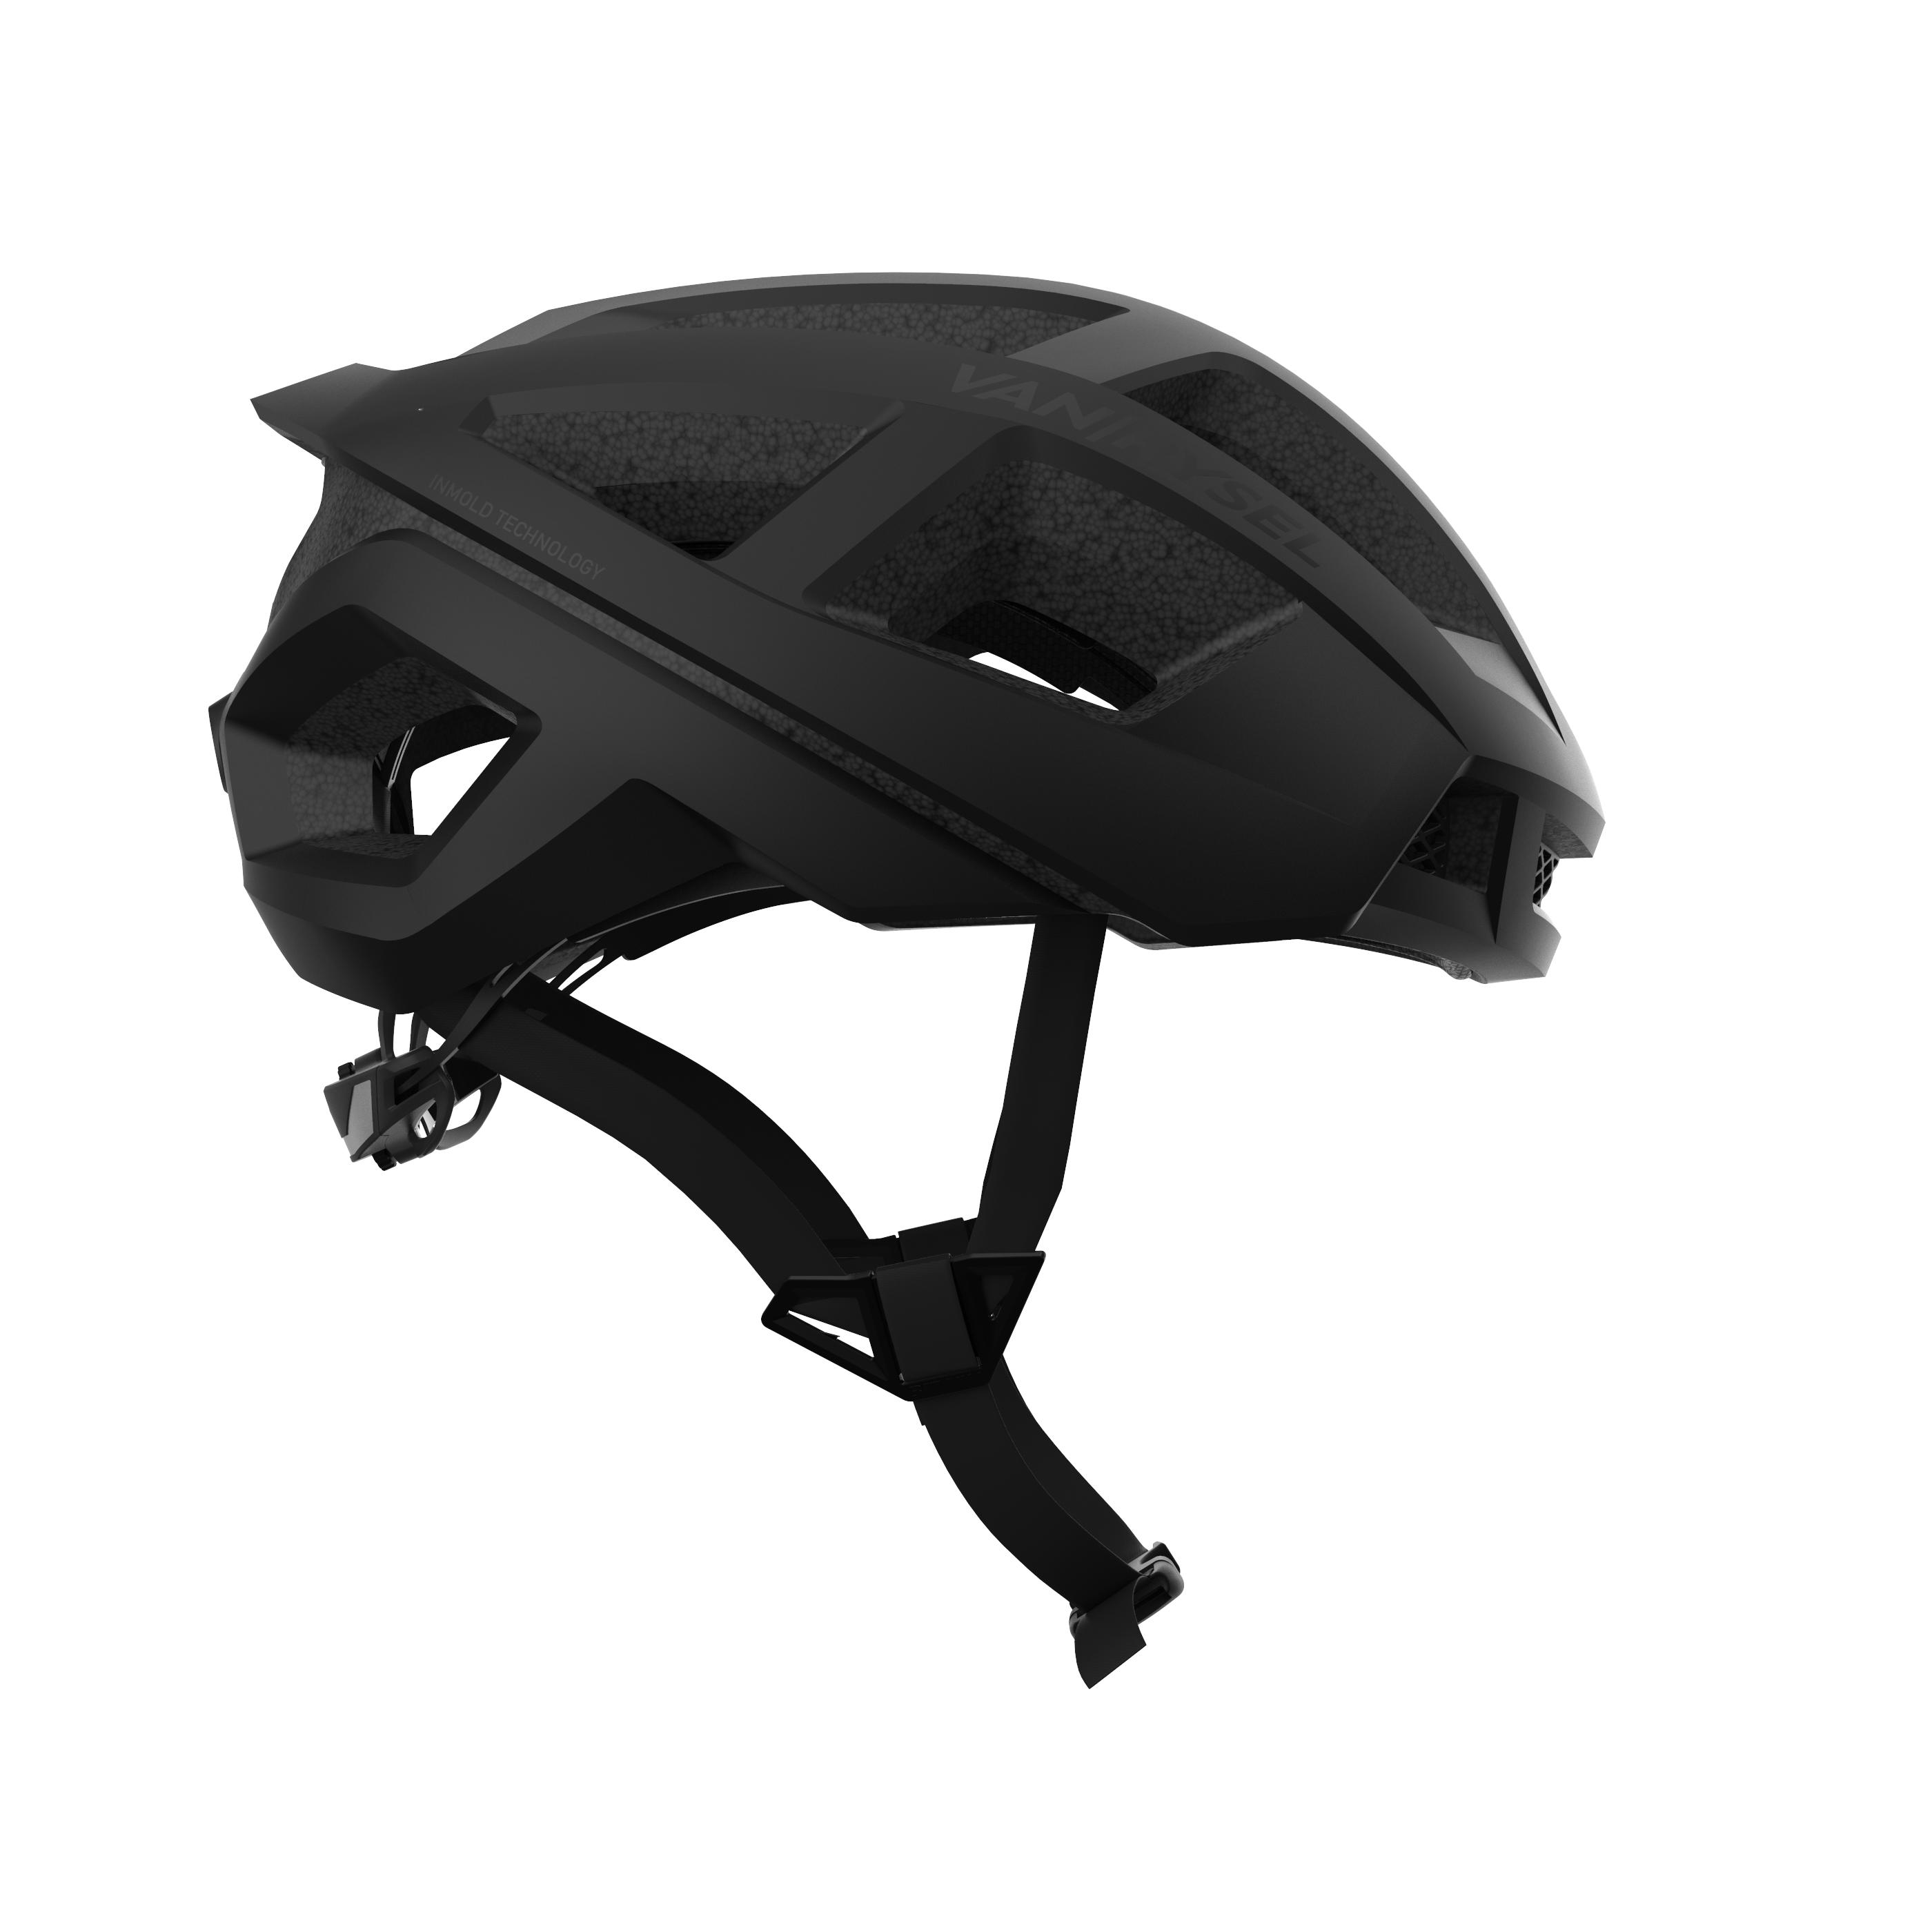 Racer Cycling Helmet - Black 5/7